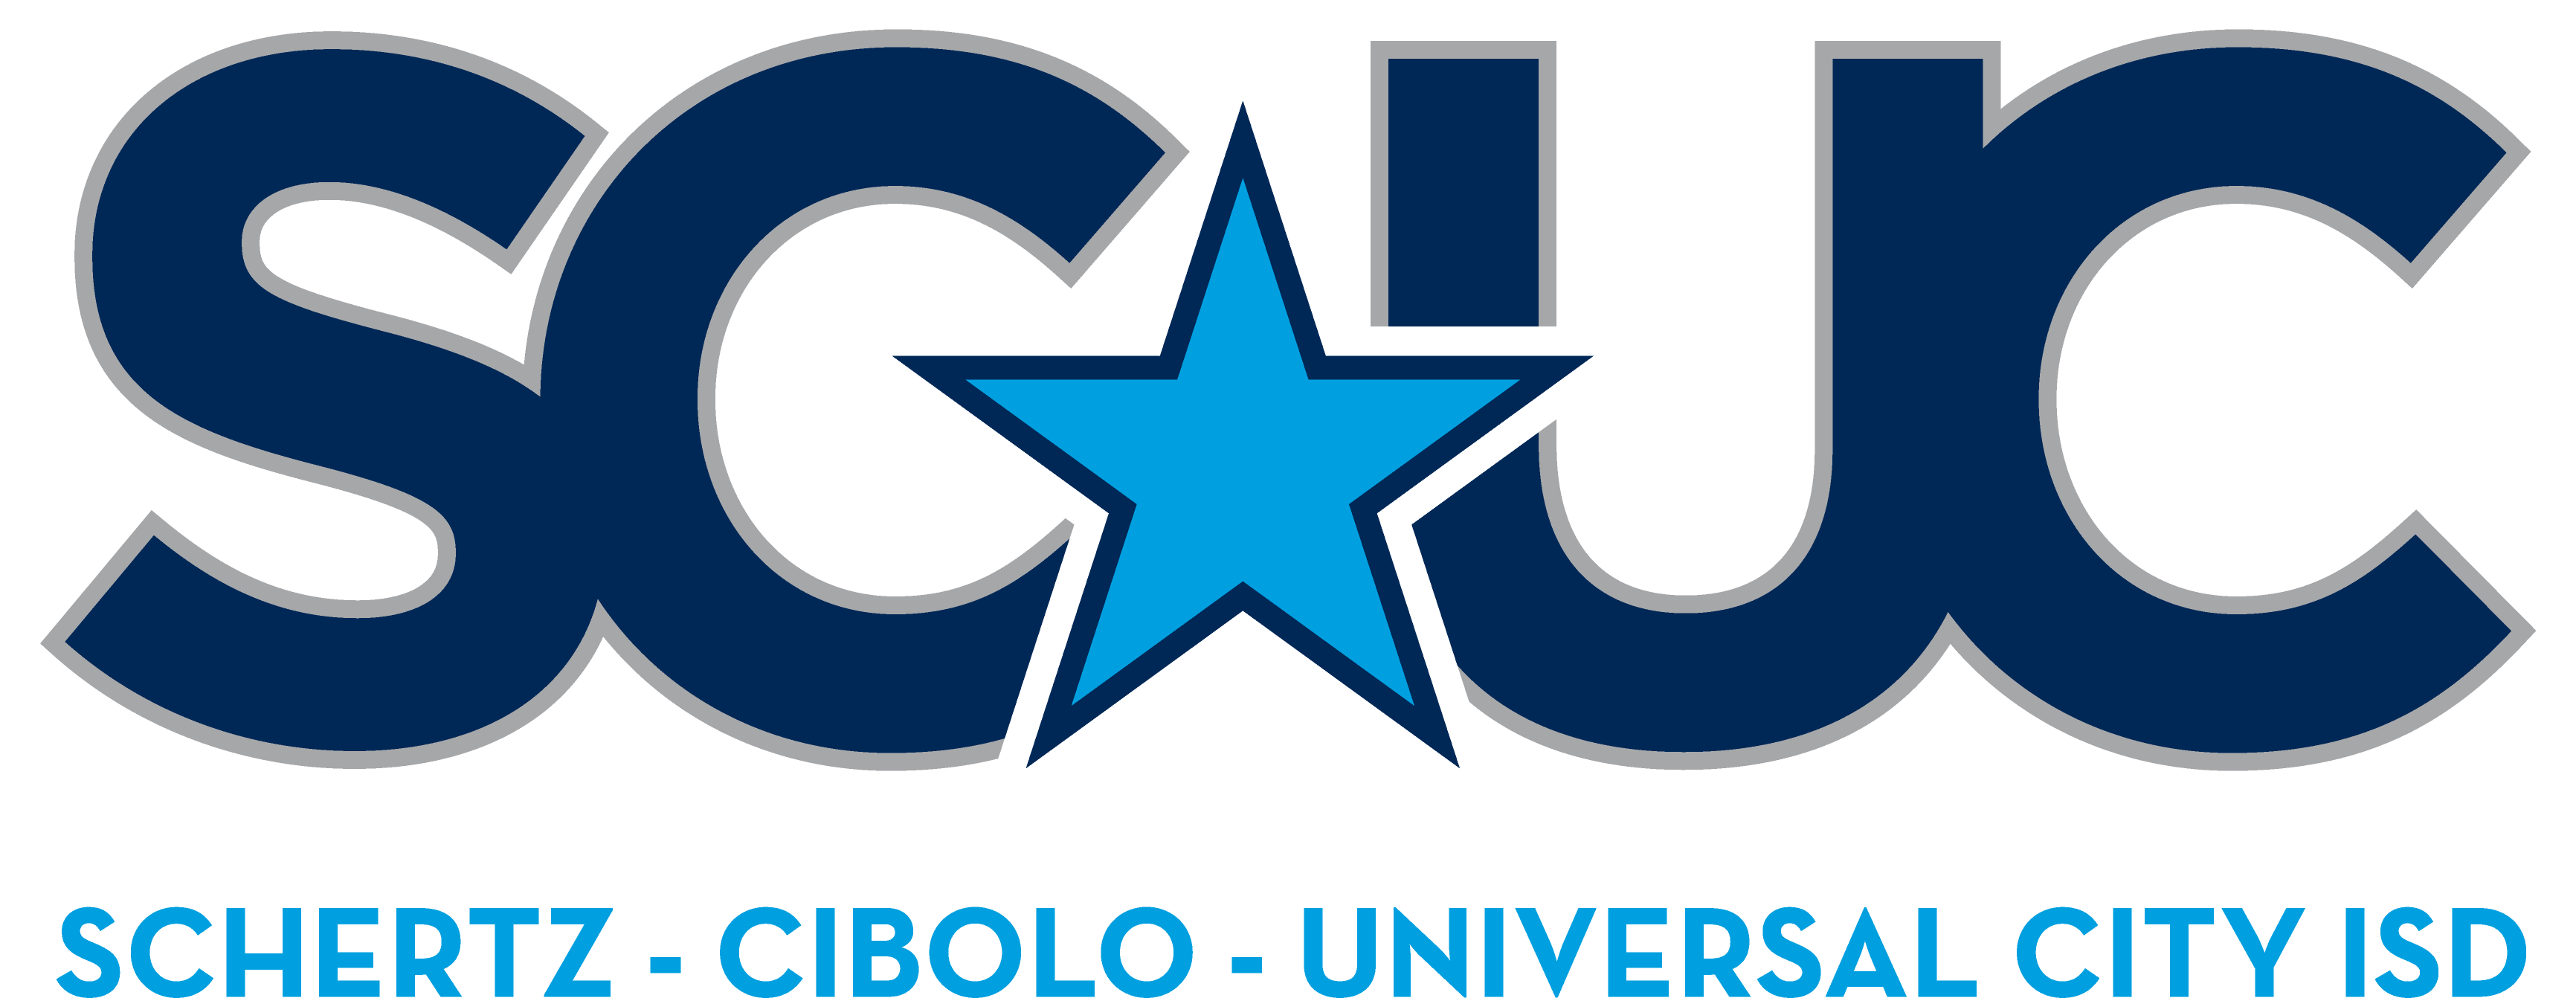 Schertz-Cibolo-Universal City ISD's Logo